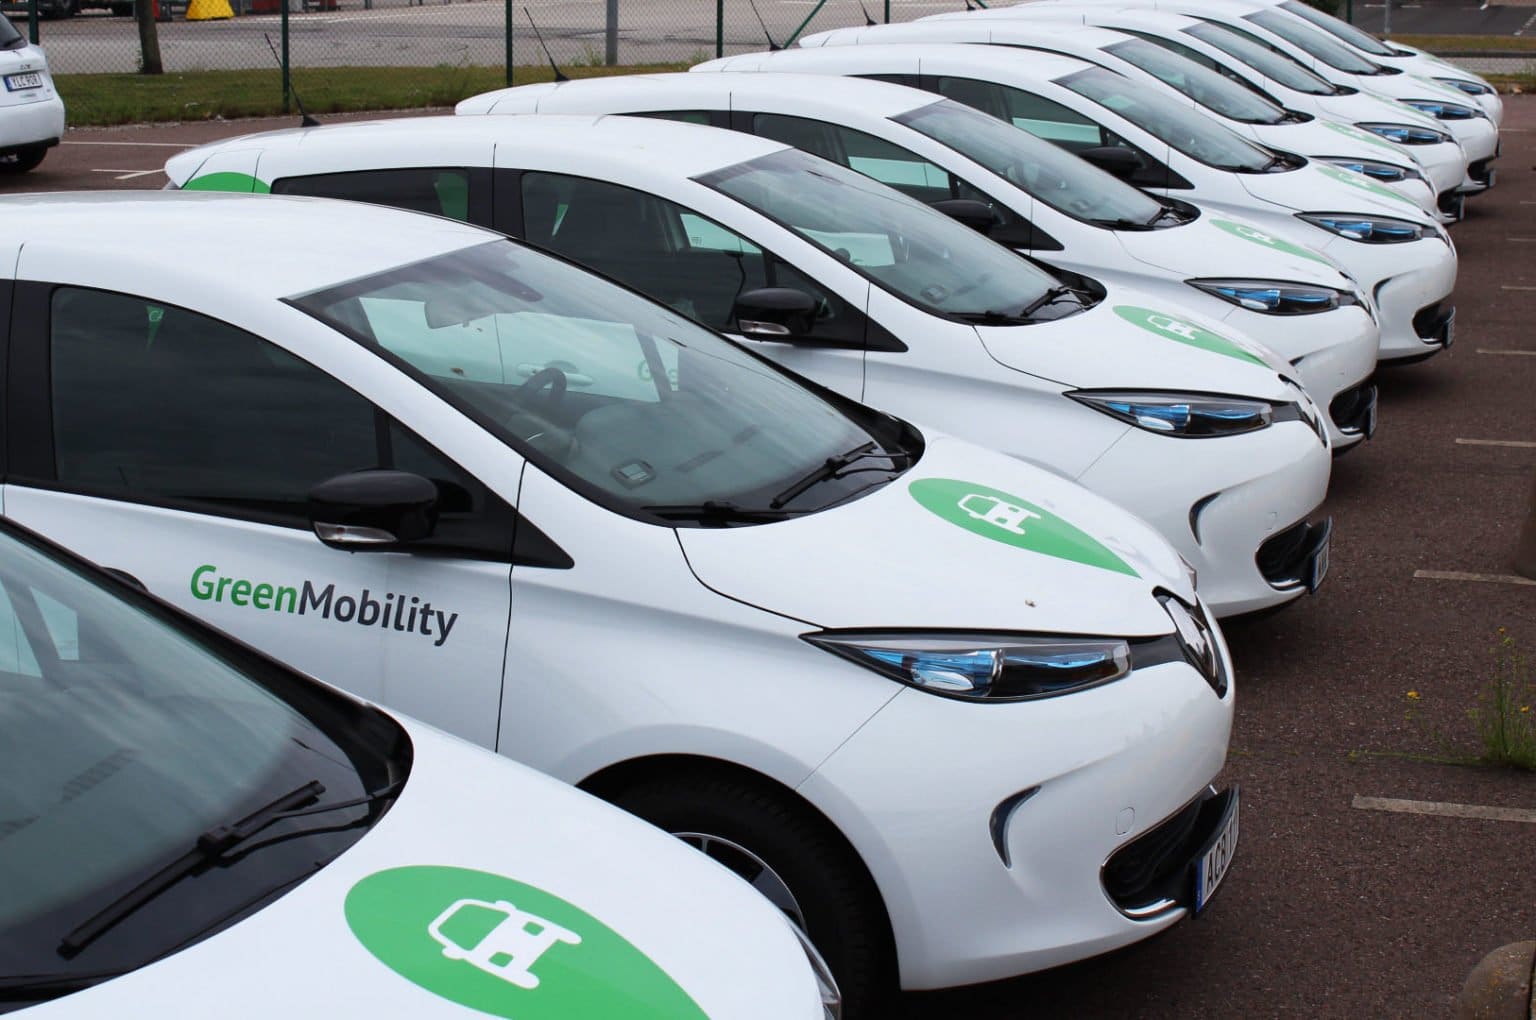 long row of GreenMobility cars